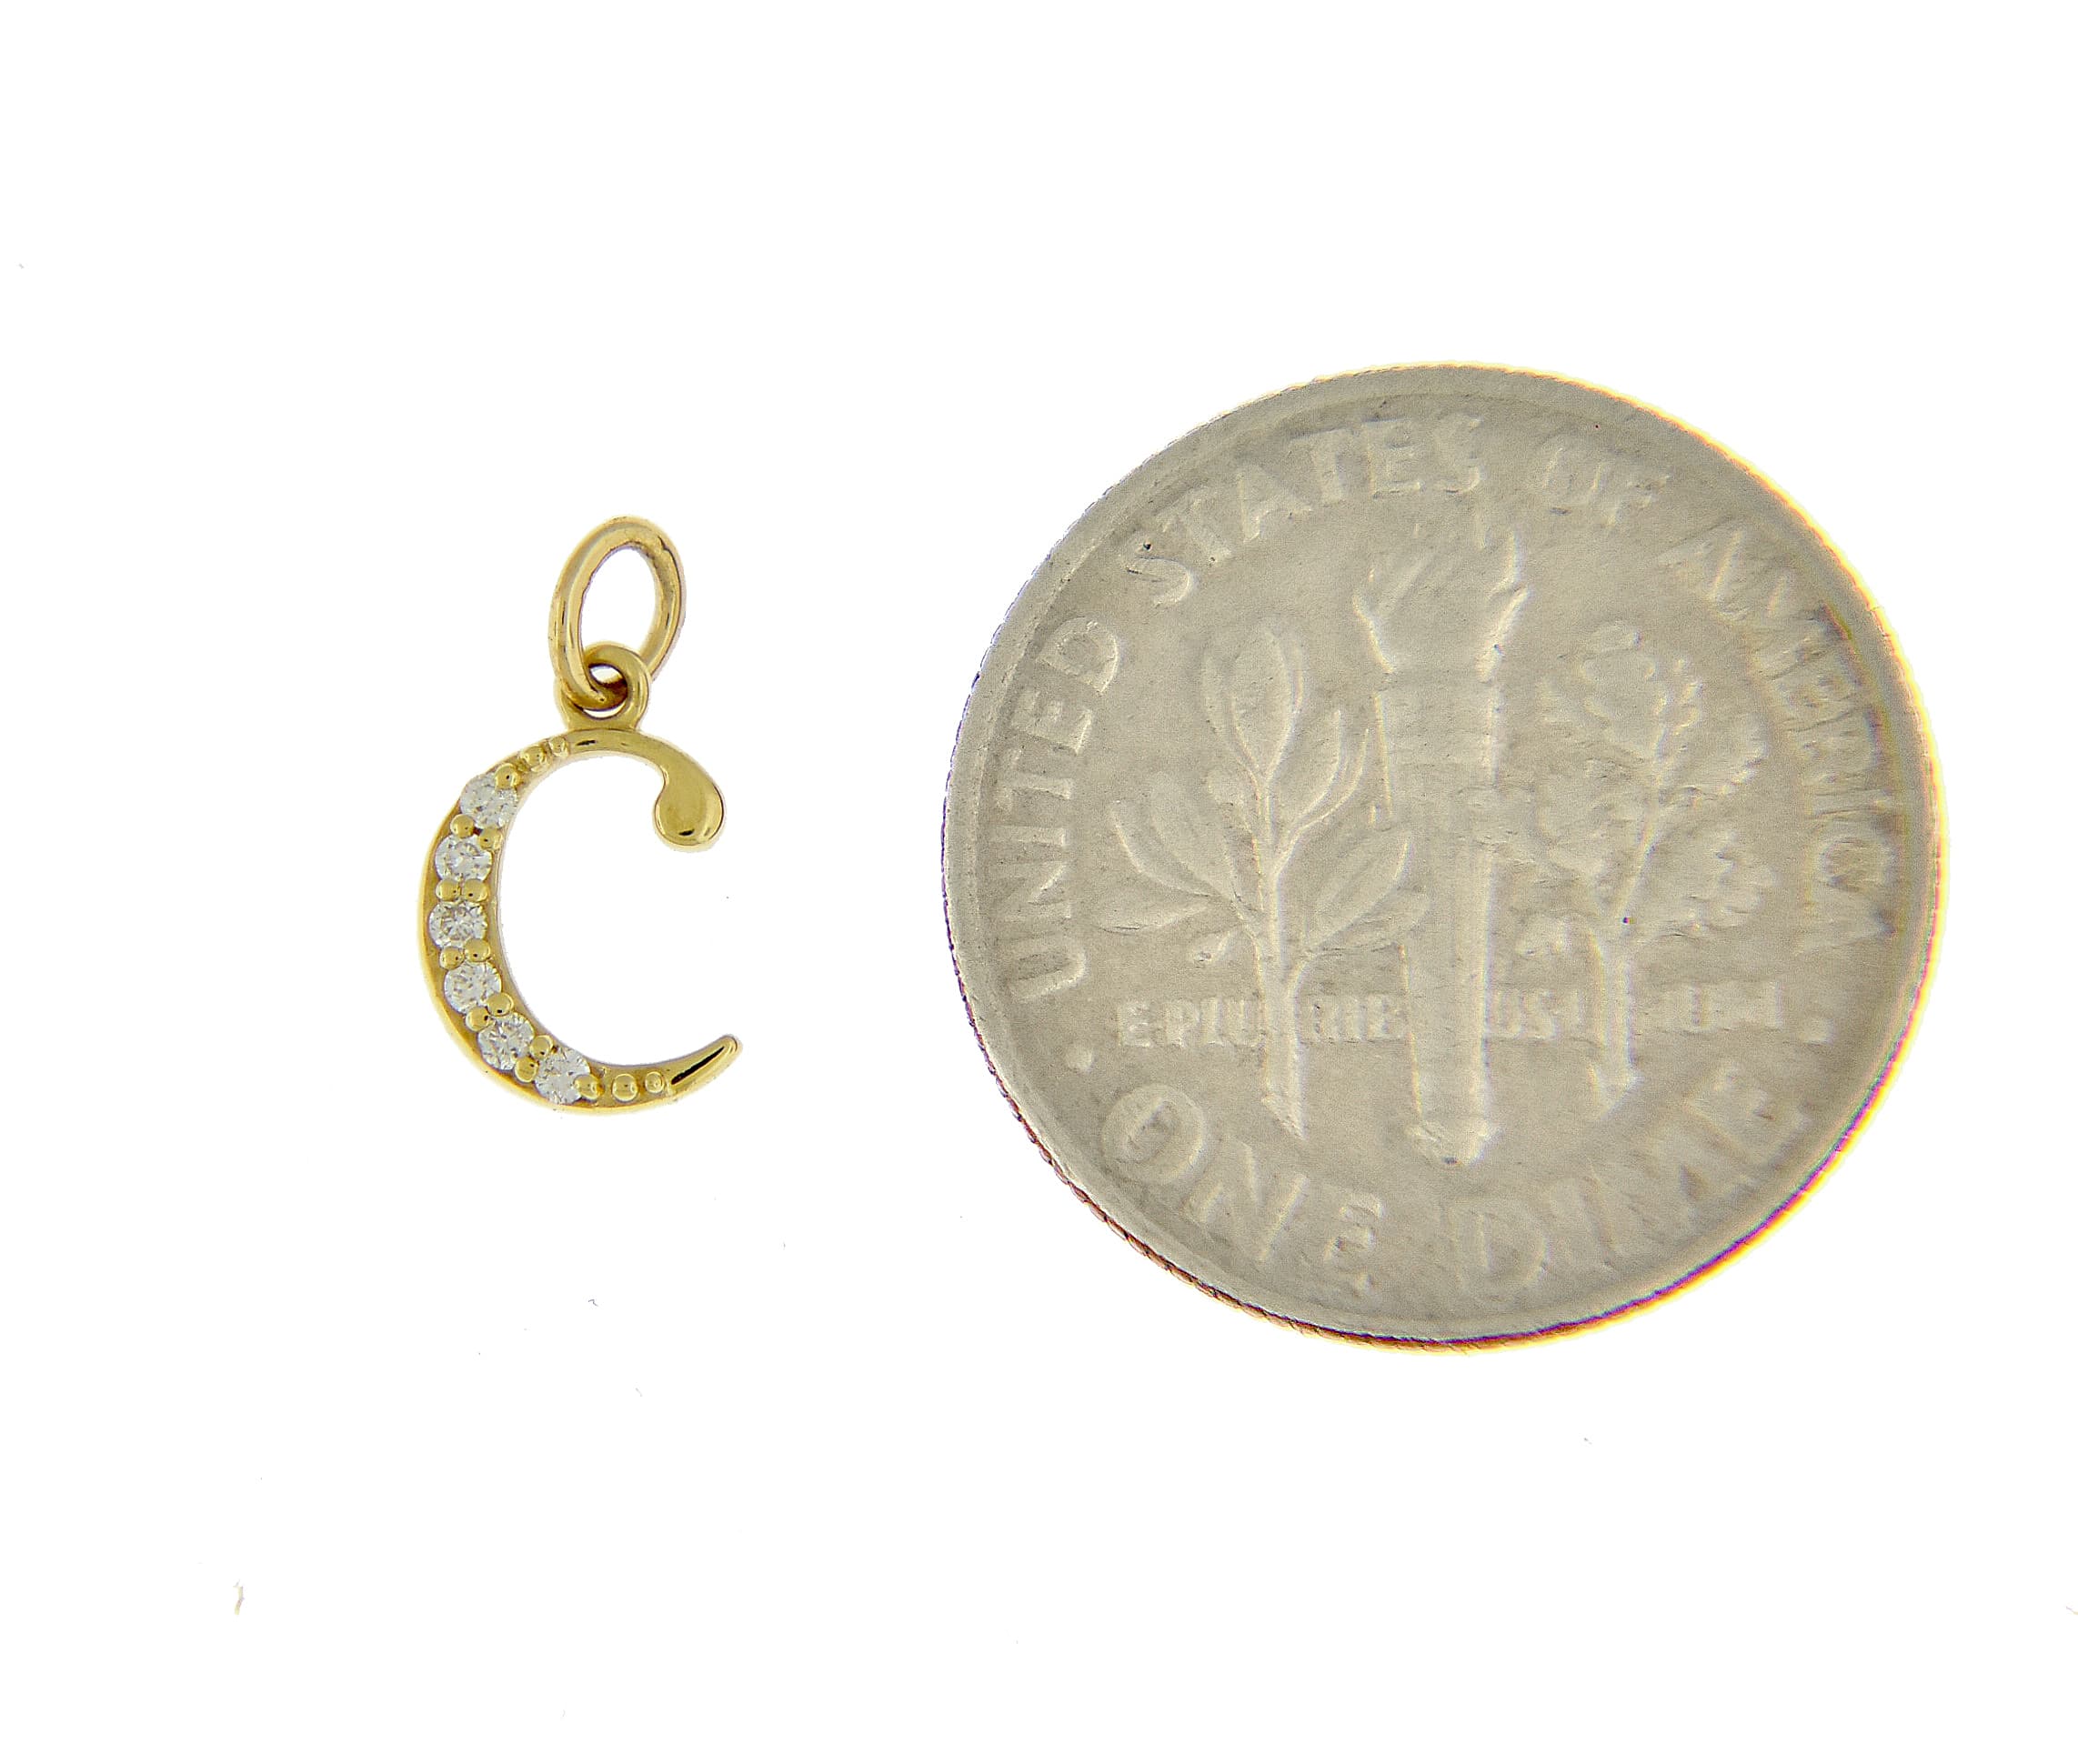 14K Yellow Rose White Gold .03 CTW Diamond Tiny Petite Lowercase Letter C Initial Alphabet Pendant Charm Necklace